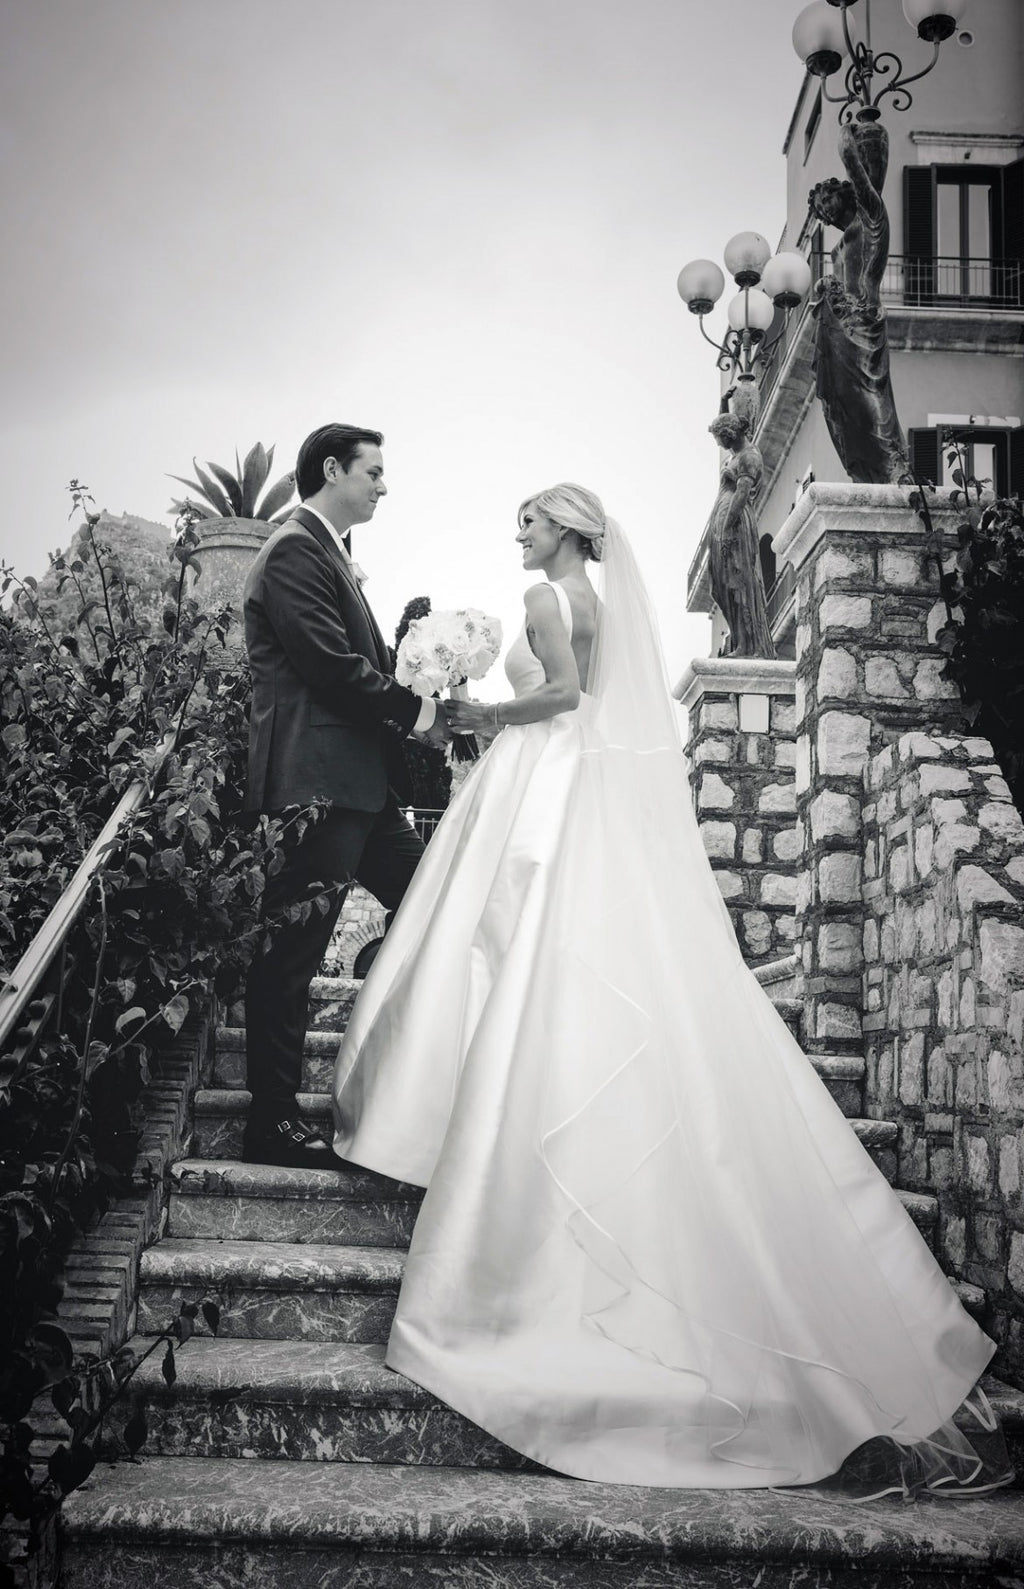 Dream Weddings Grand Hotel Timeo Taormina - Marco Ficili Photographer